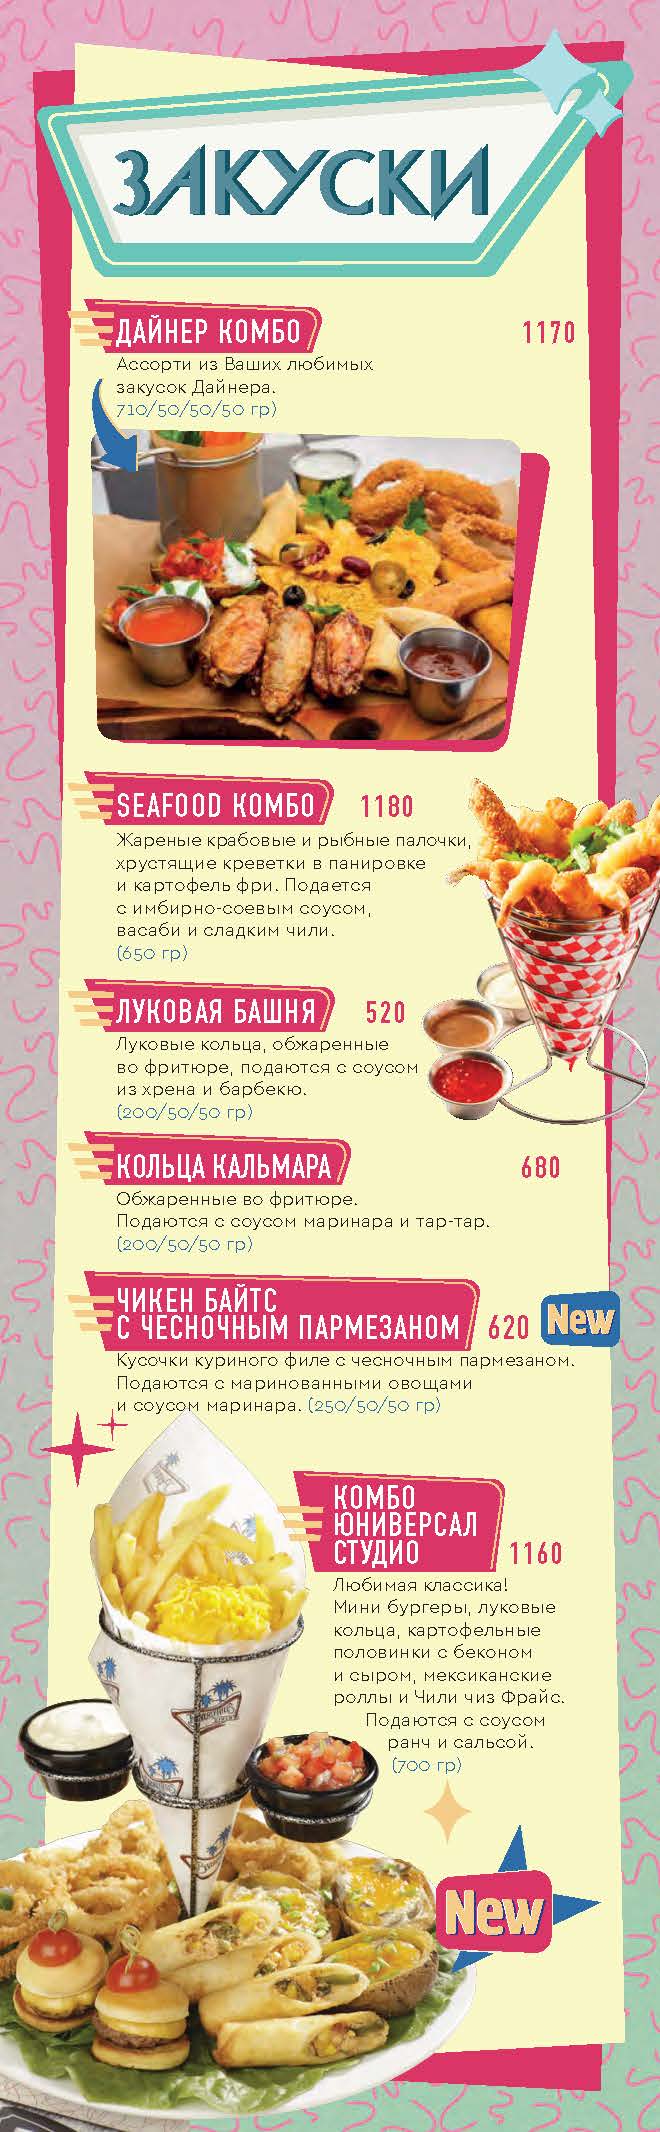 appetizer_menu